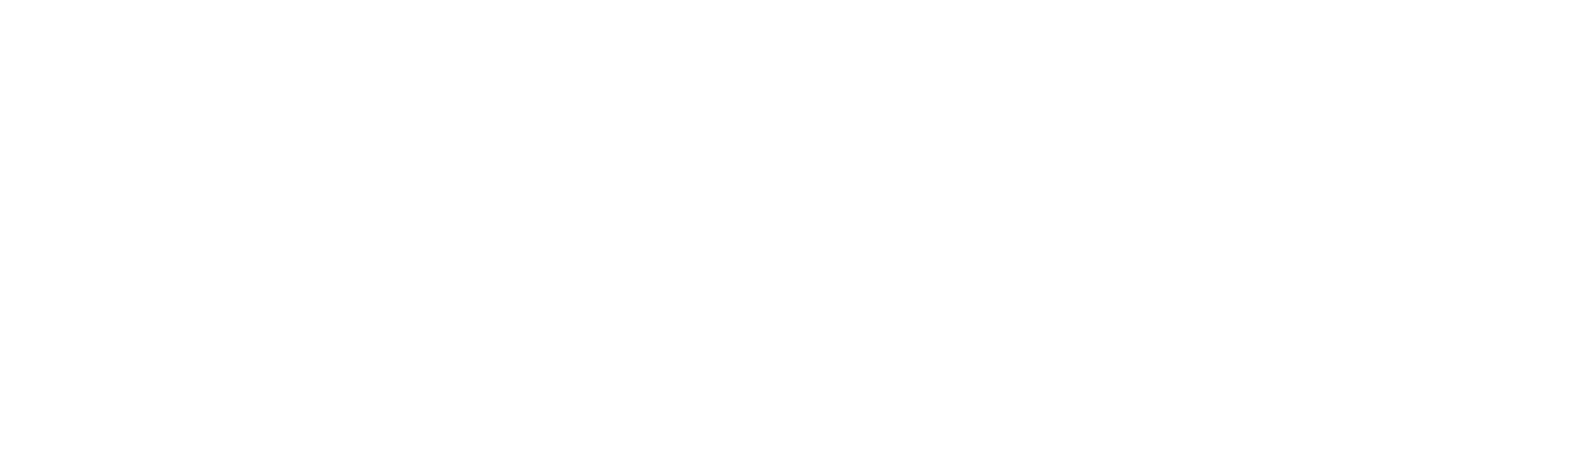 HELLENiQ ENERGY logo large for dark backgrounds (transparent PNG)